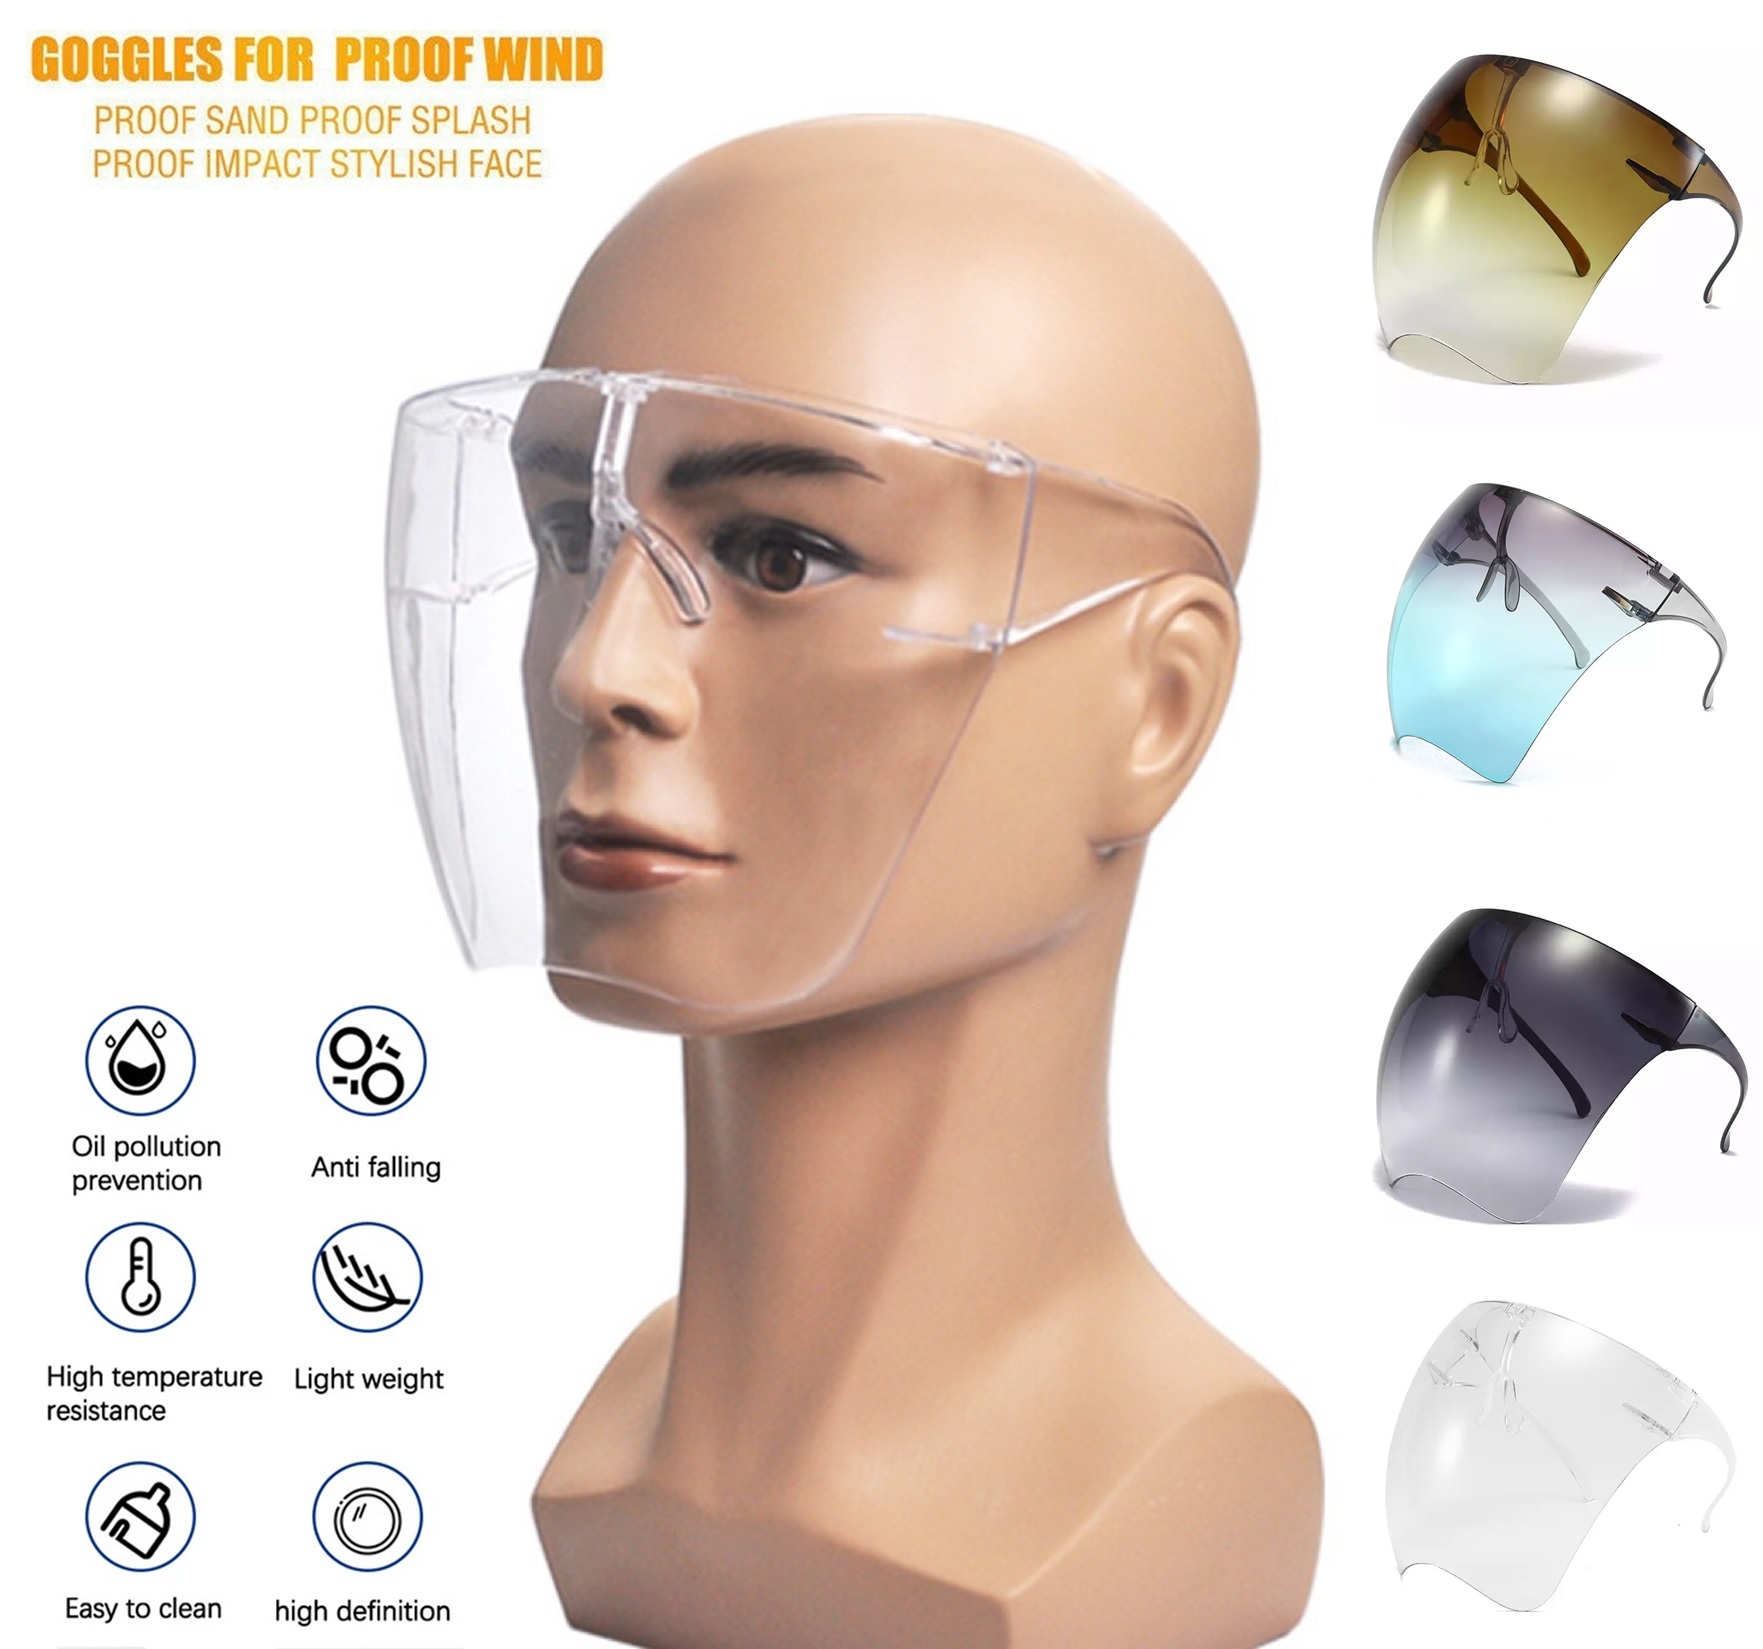 Face Shield แว่นตาปกป้องใบหน้า อคูลิกหนาแข็งแรง สินค้าพร้อมส่งจากไทย